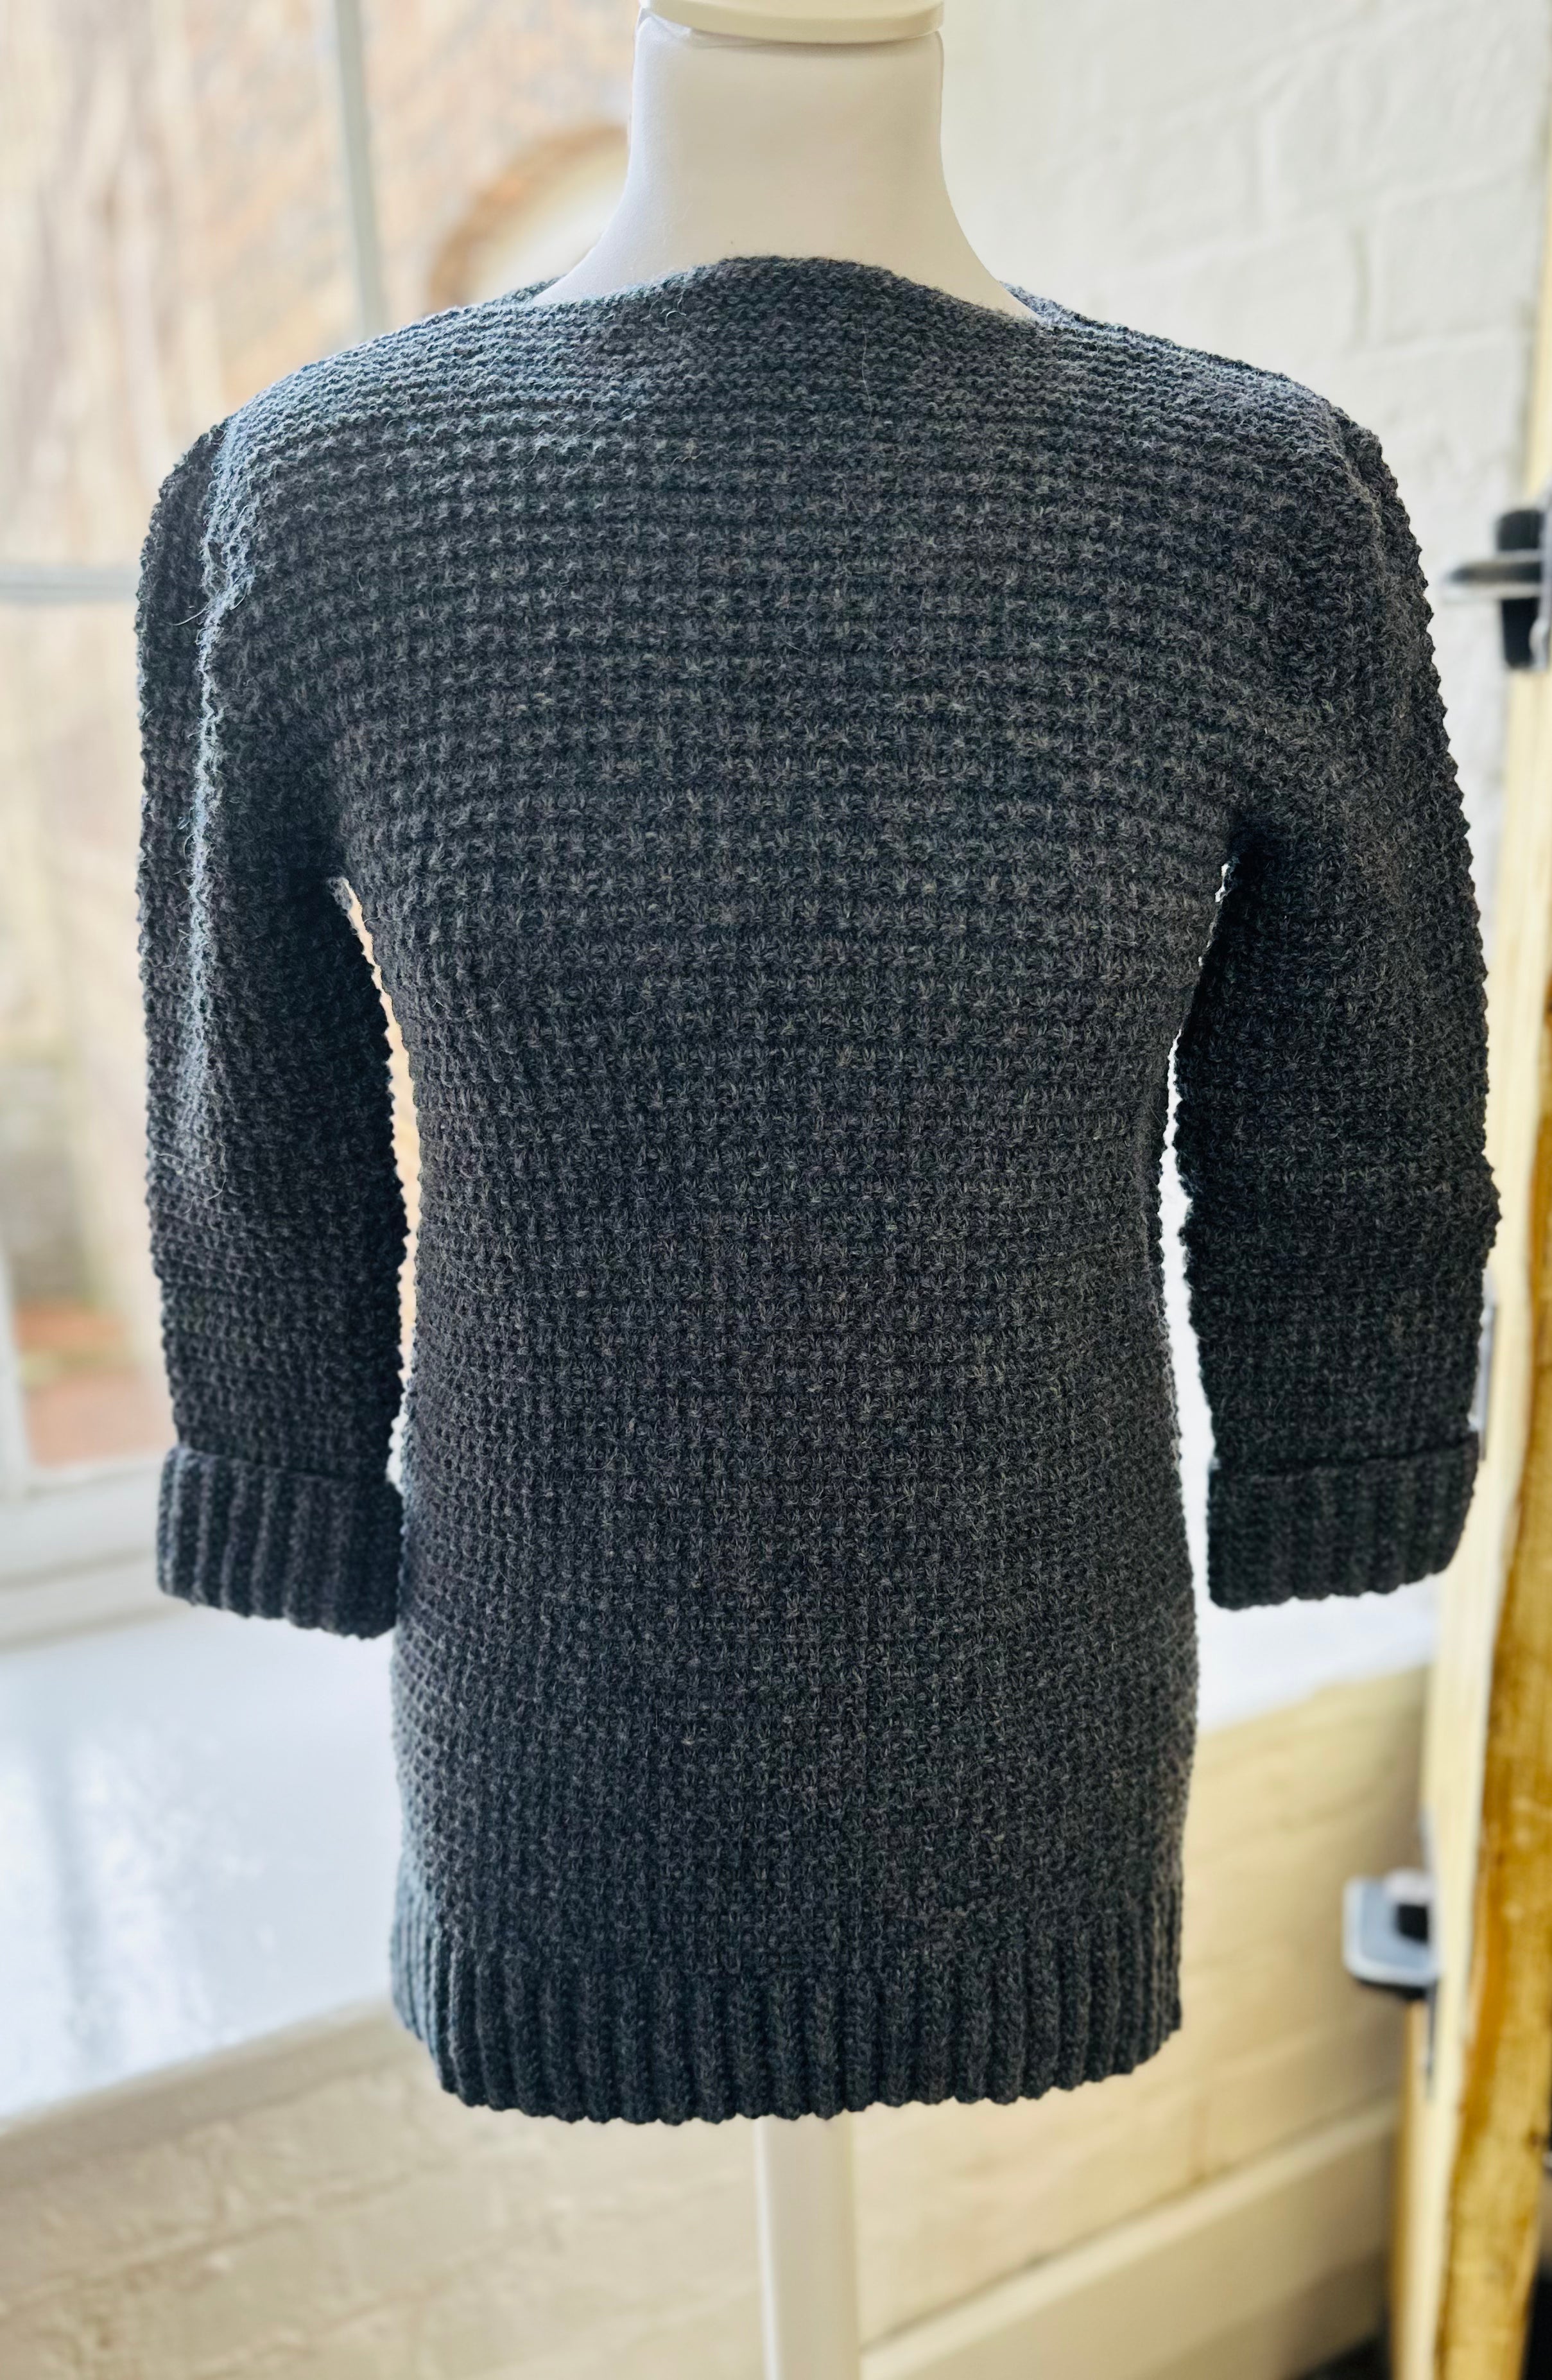 New Lanark Sweater - Size Small